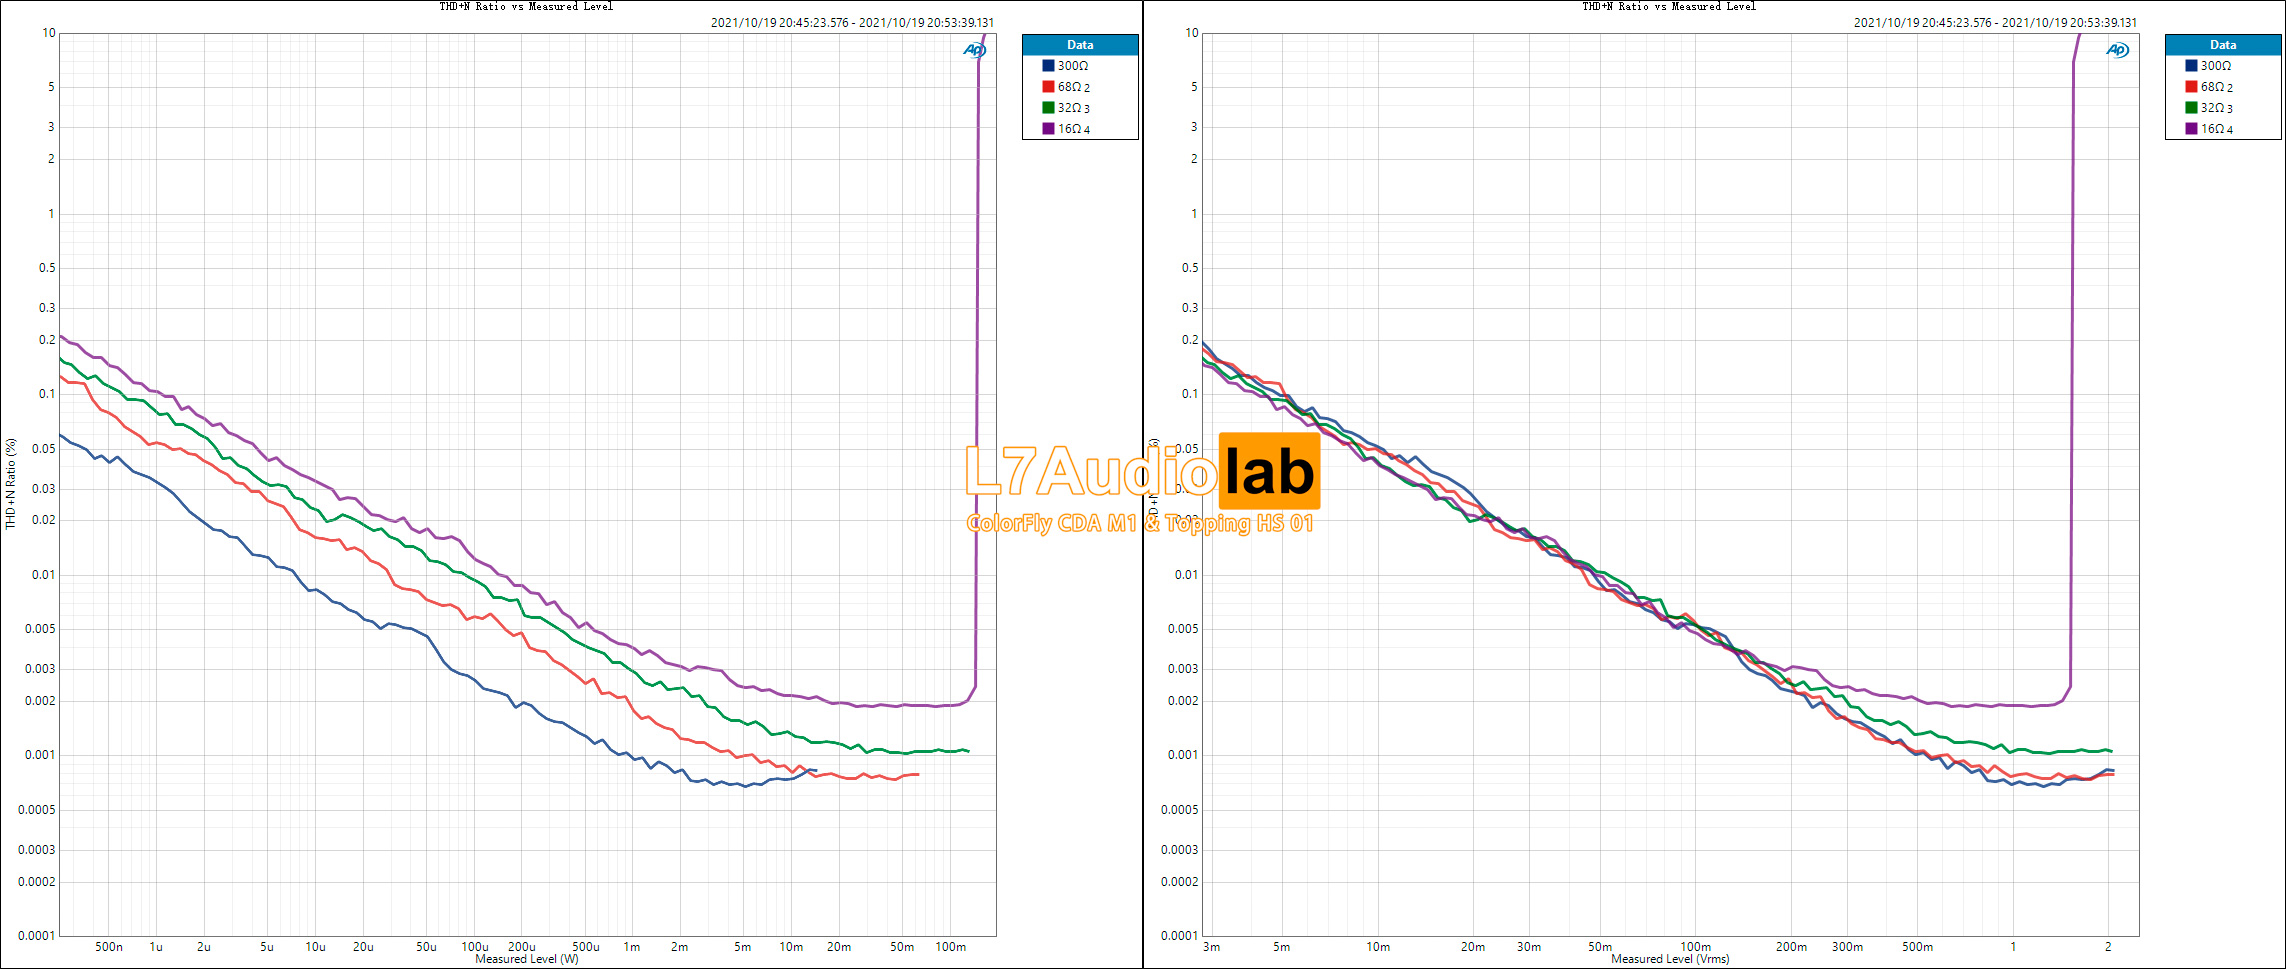 UNBAL-THDN-Ratio-vs-Measured-Level.jpg